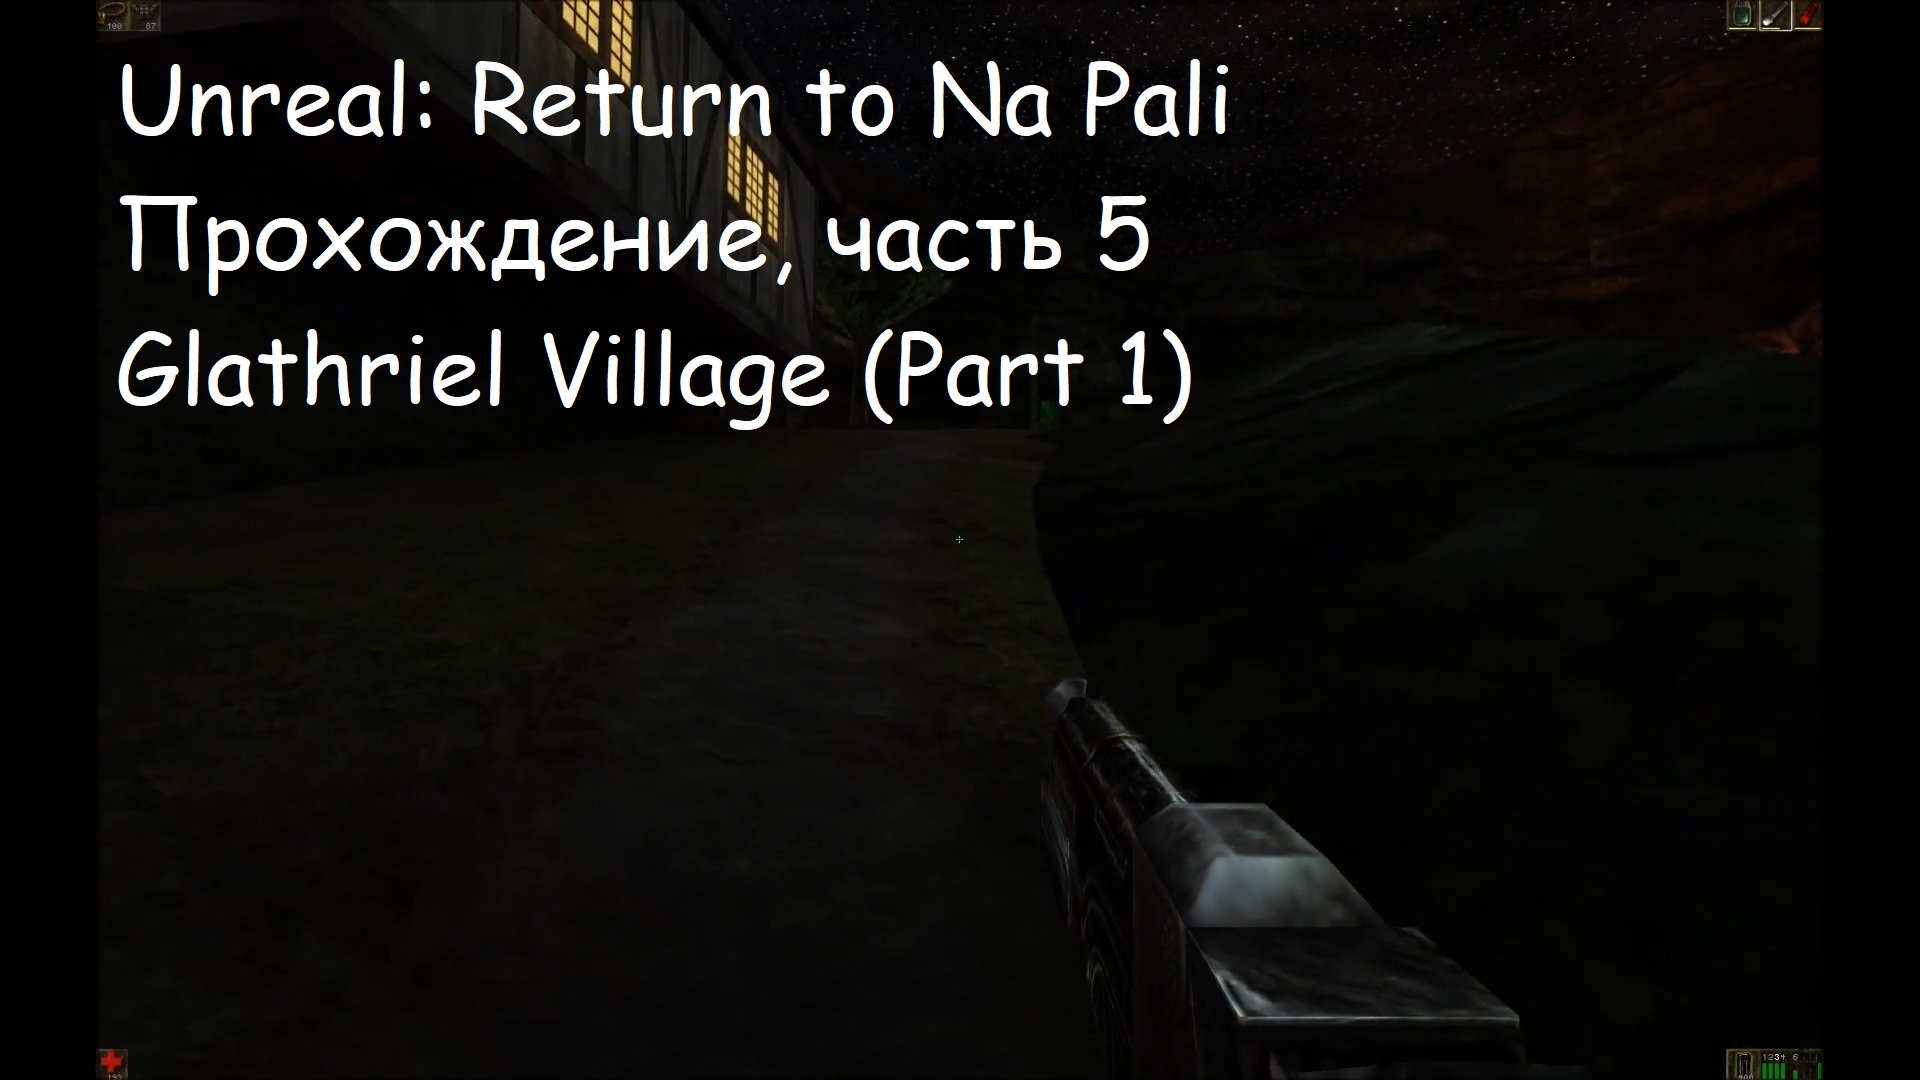 Unreal: Return to Na Pali, Прохождение, часть 5 - Glathriel Village (Part 1)